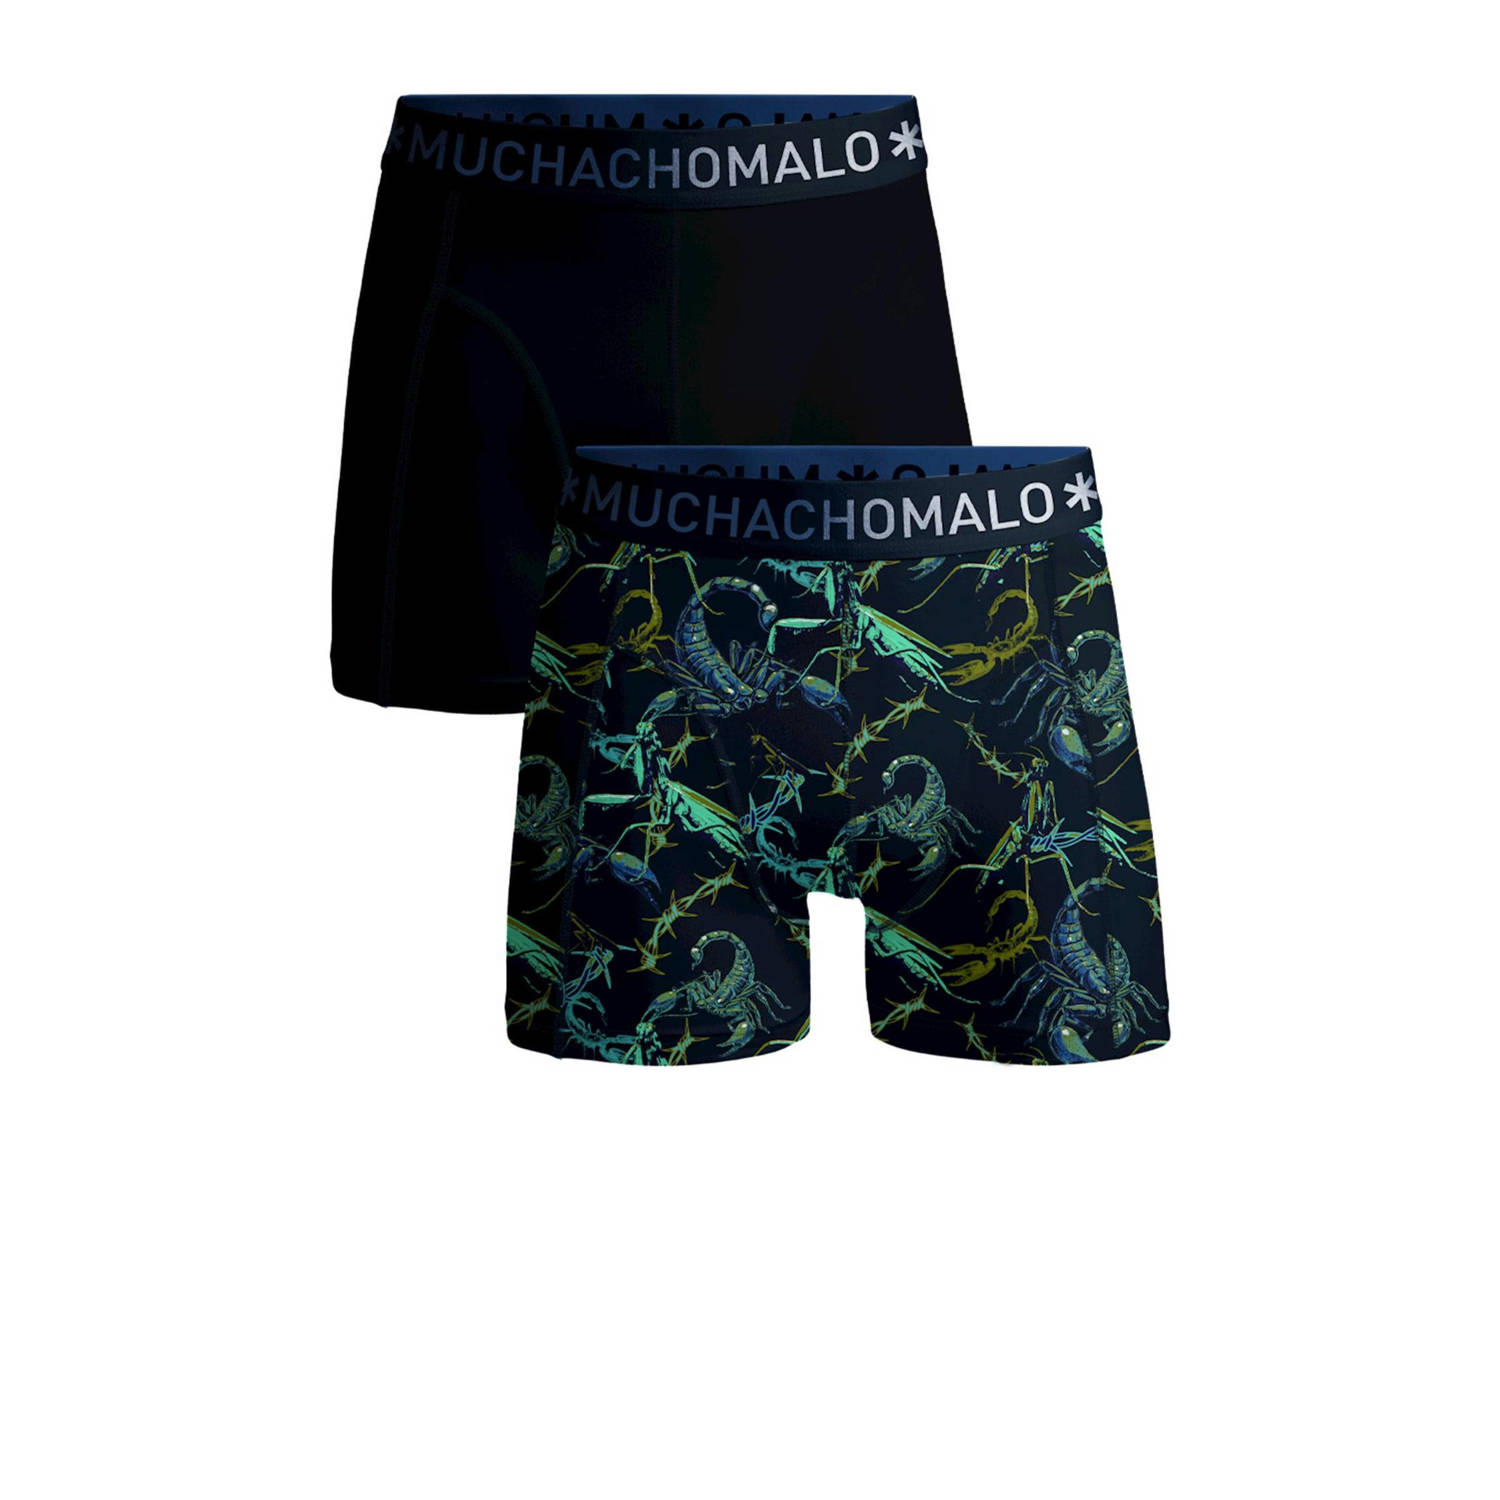 Muchachomalo boxershort SCORPION set van 2 zwart groen